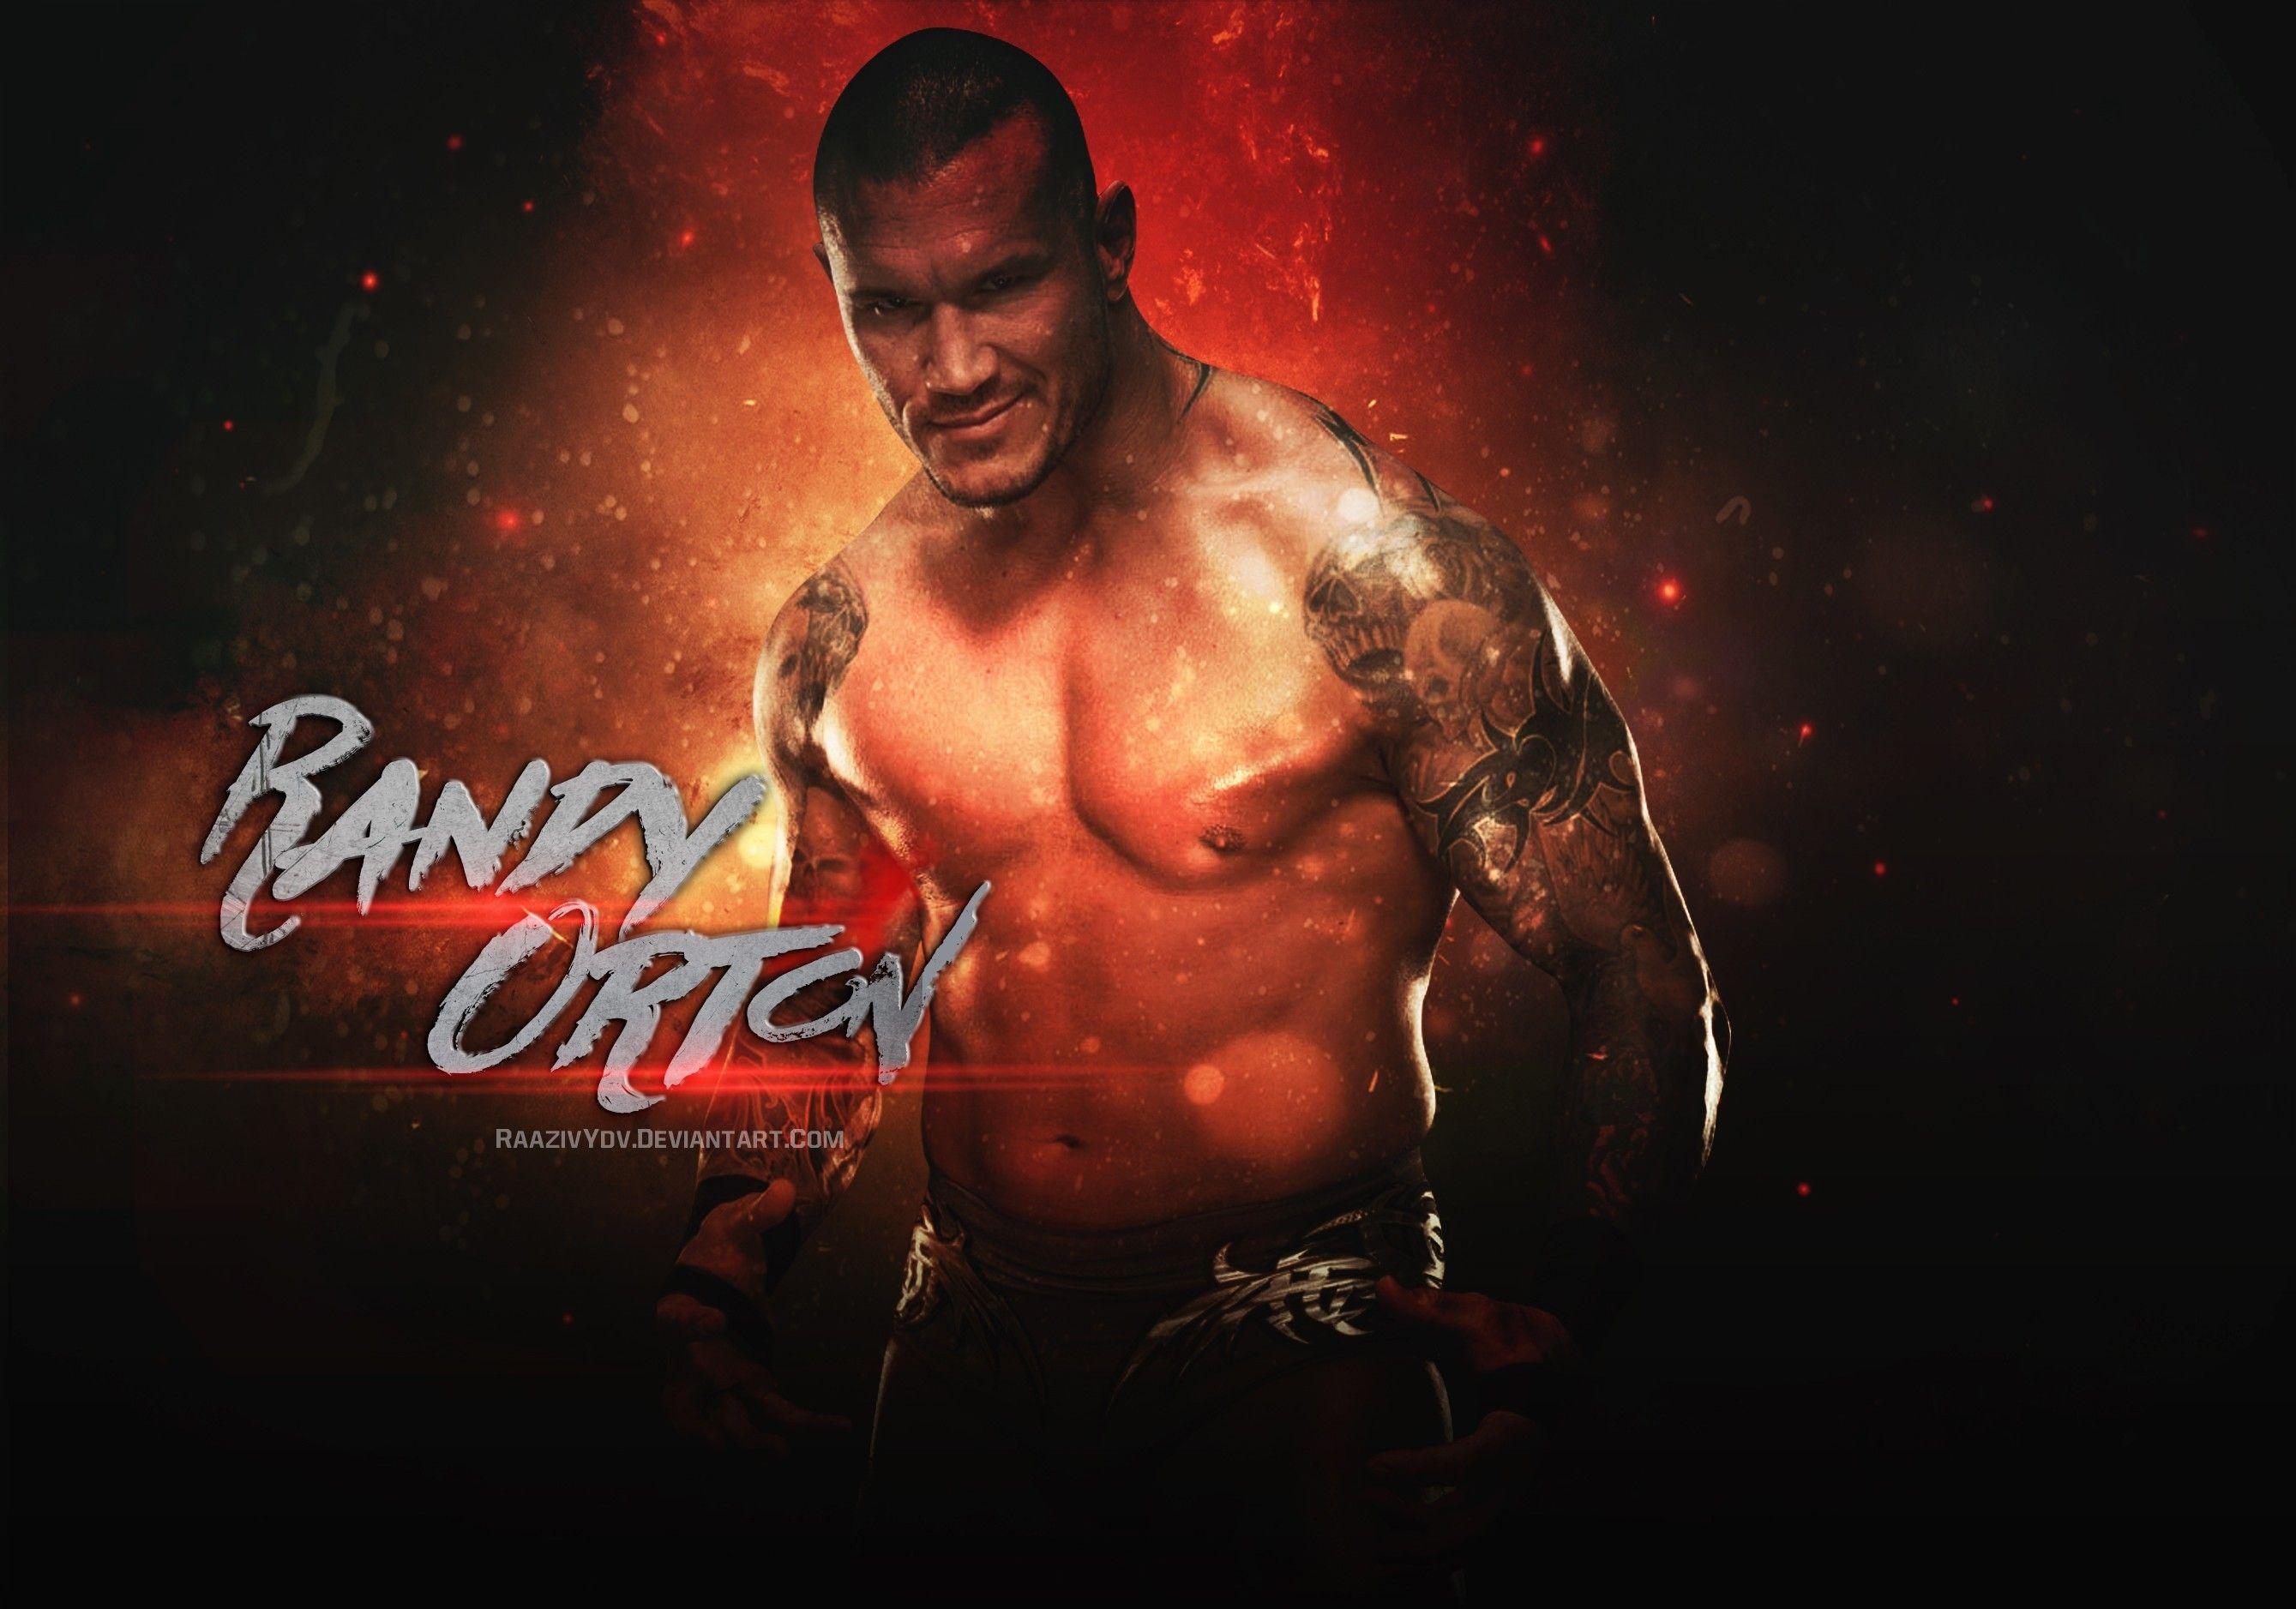 Randy Orton Image Wallpaper